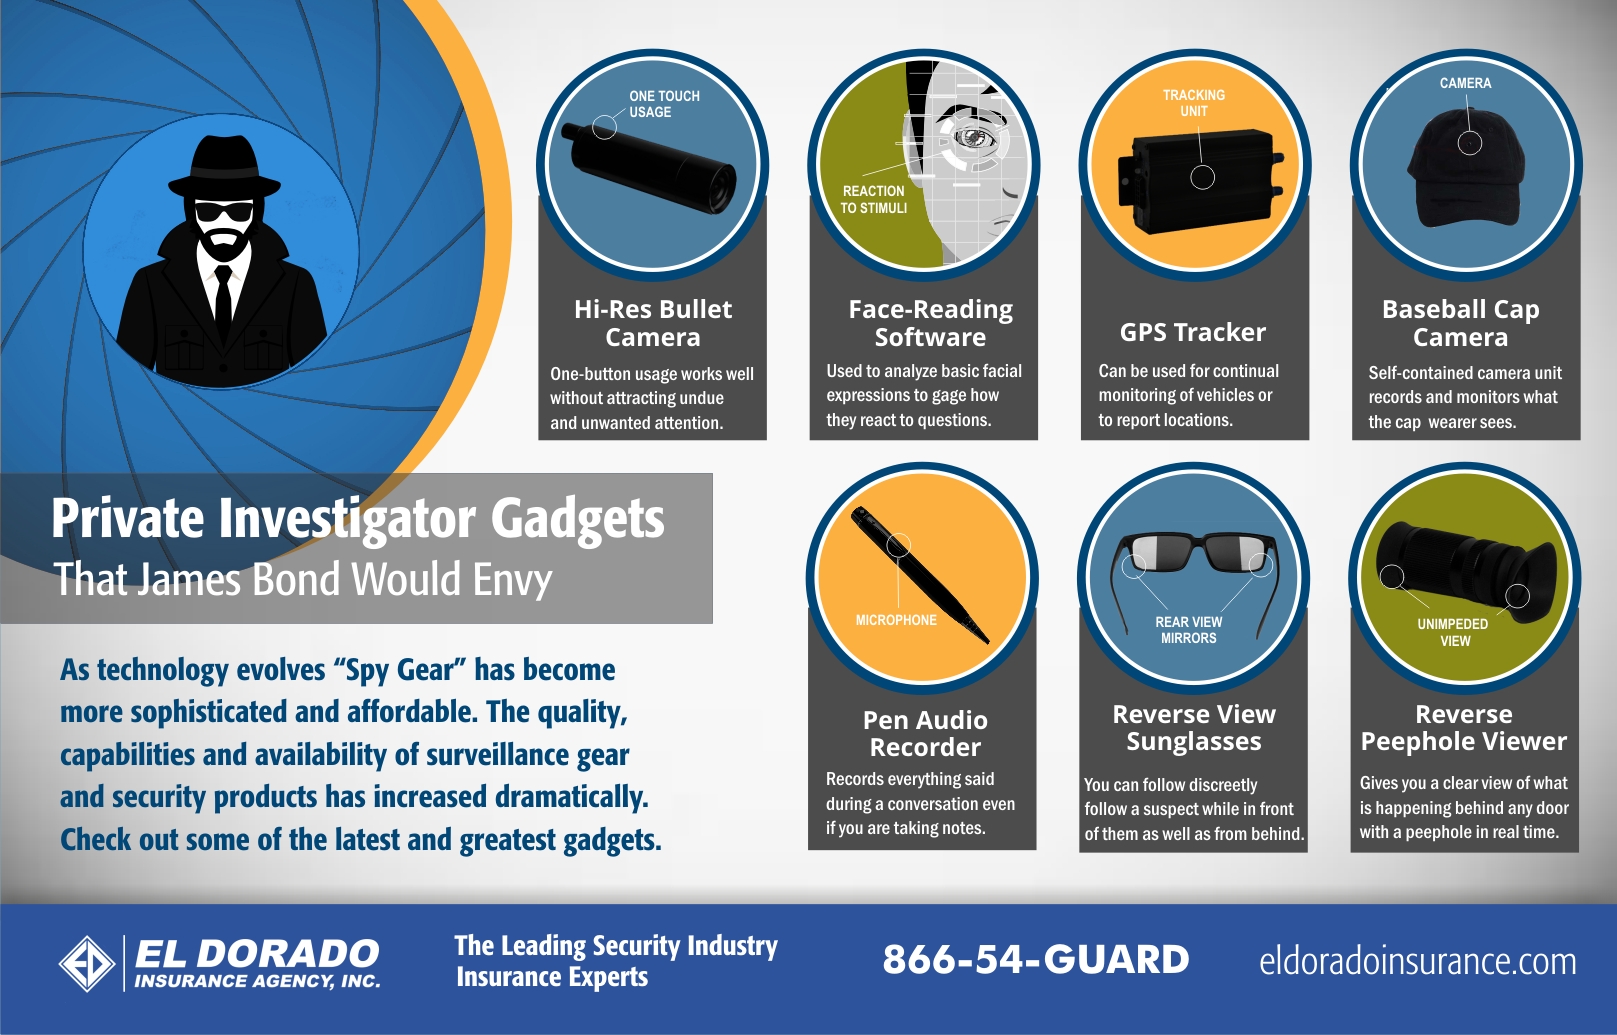 ED_infographic_7_bond_gadgets